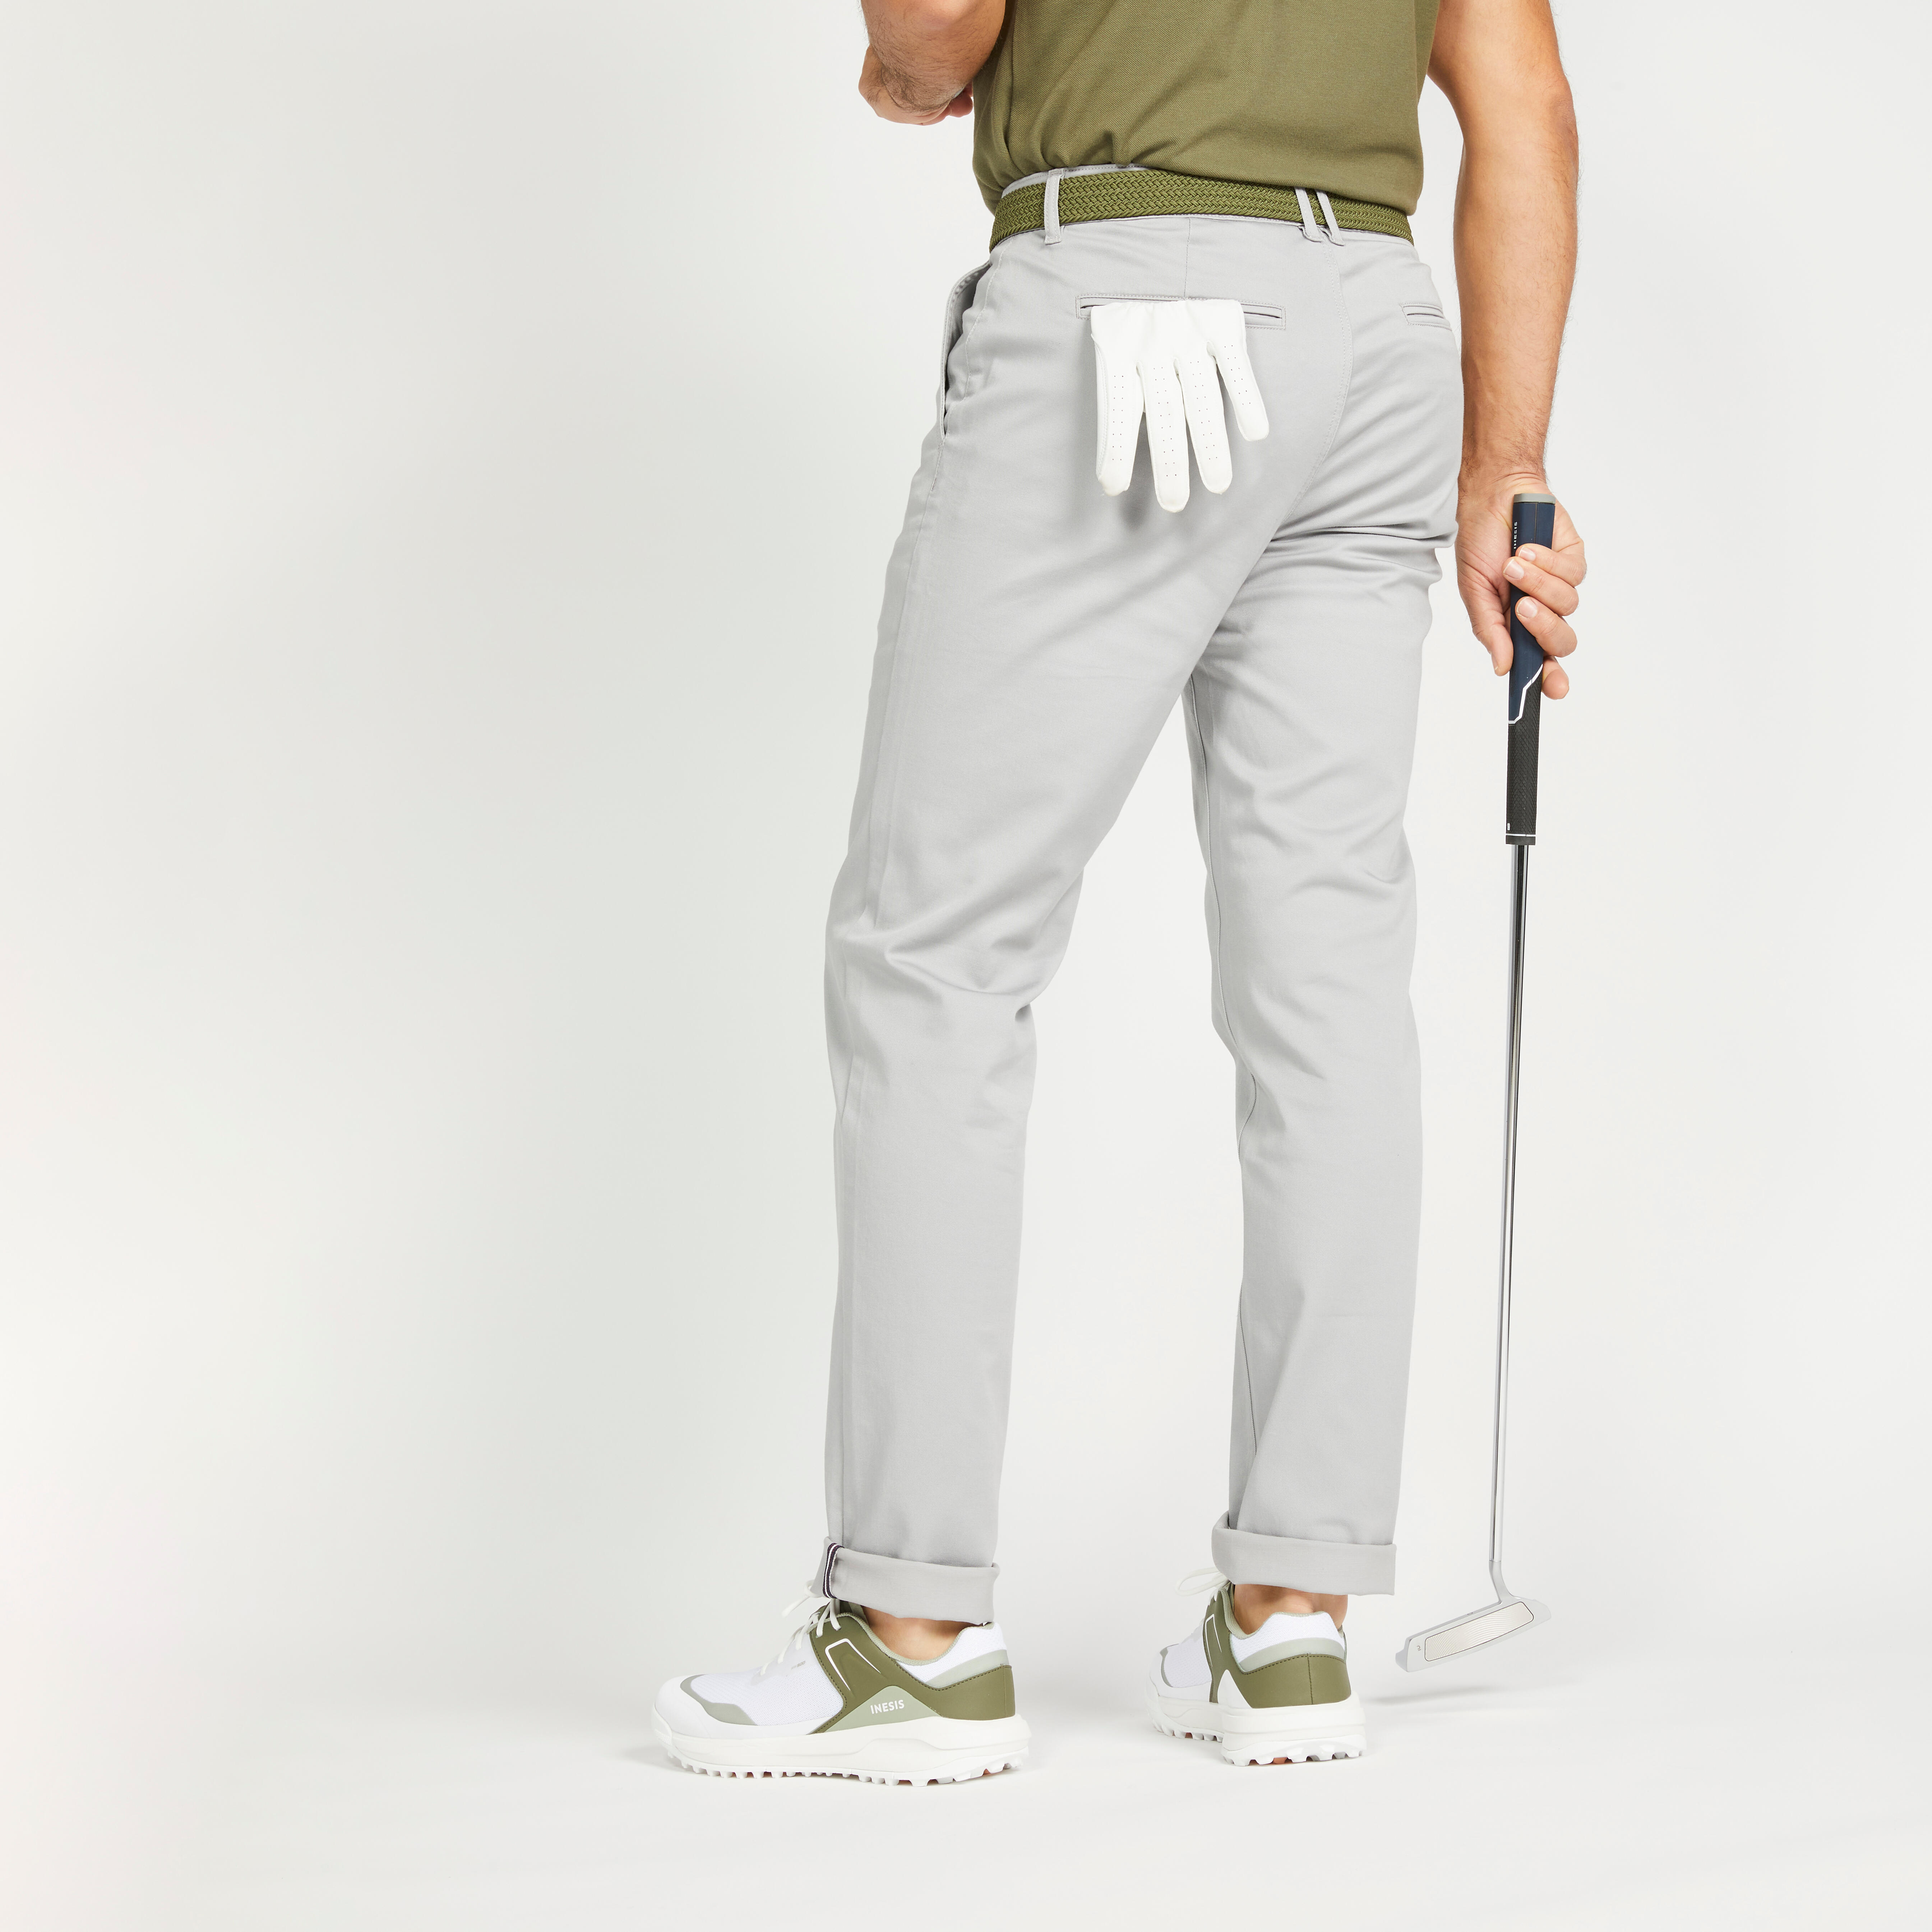 Puma Golf clothing Whats new for 2022  National Club Golfer